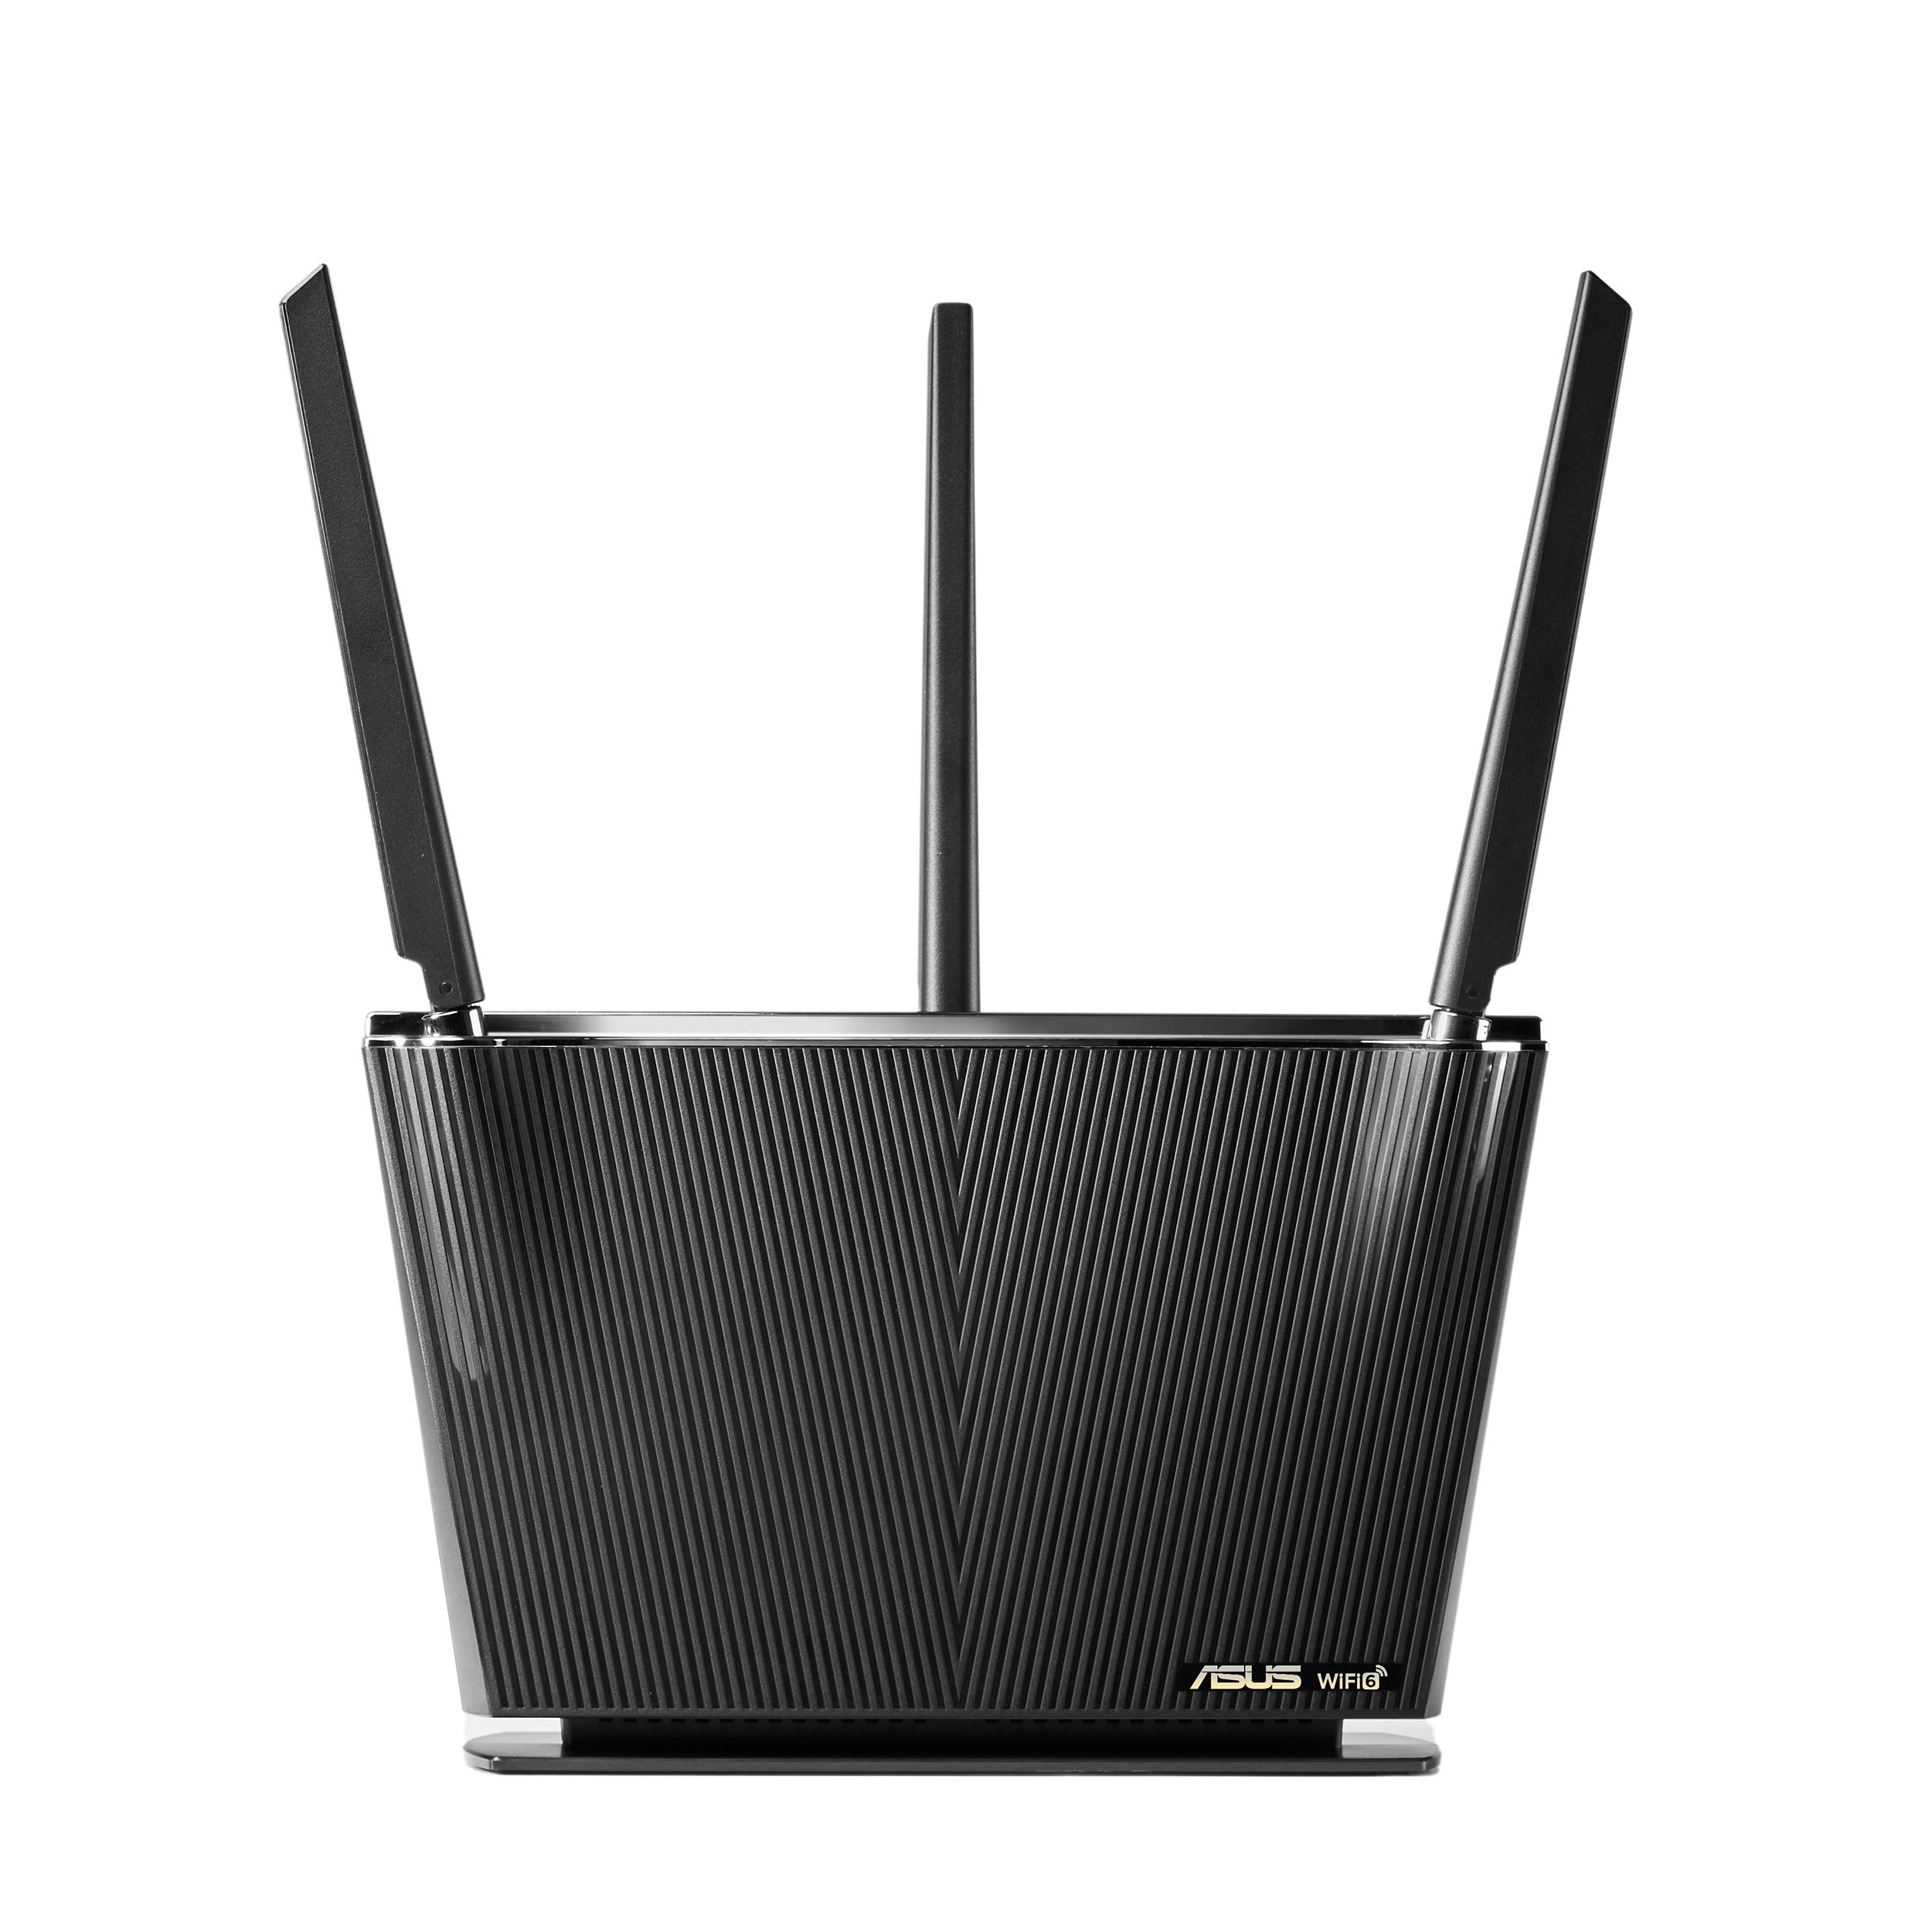 ASUS RT-AX68U AX2700 Wireless Dual-Band Gigabit Router $149.99 + Free Shipping Amazon/OfficeDepot